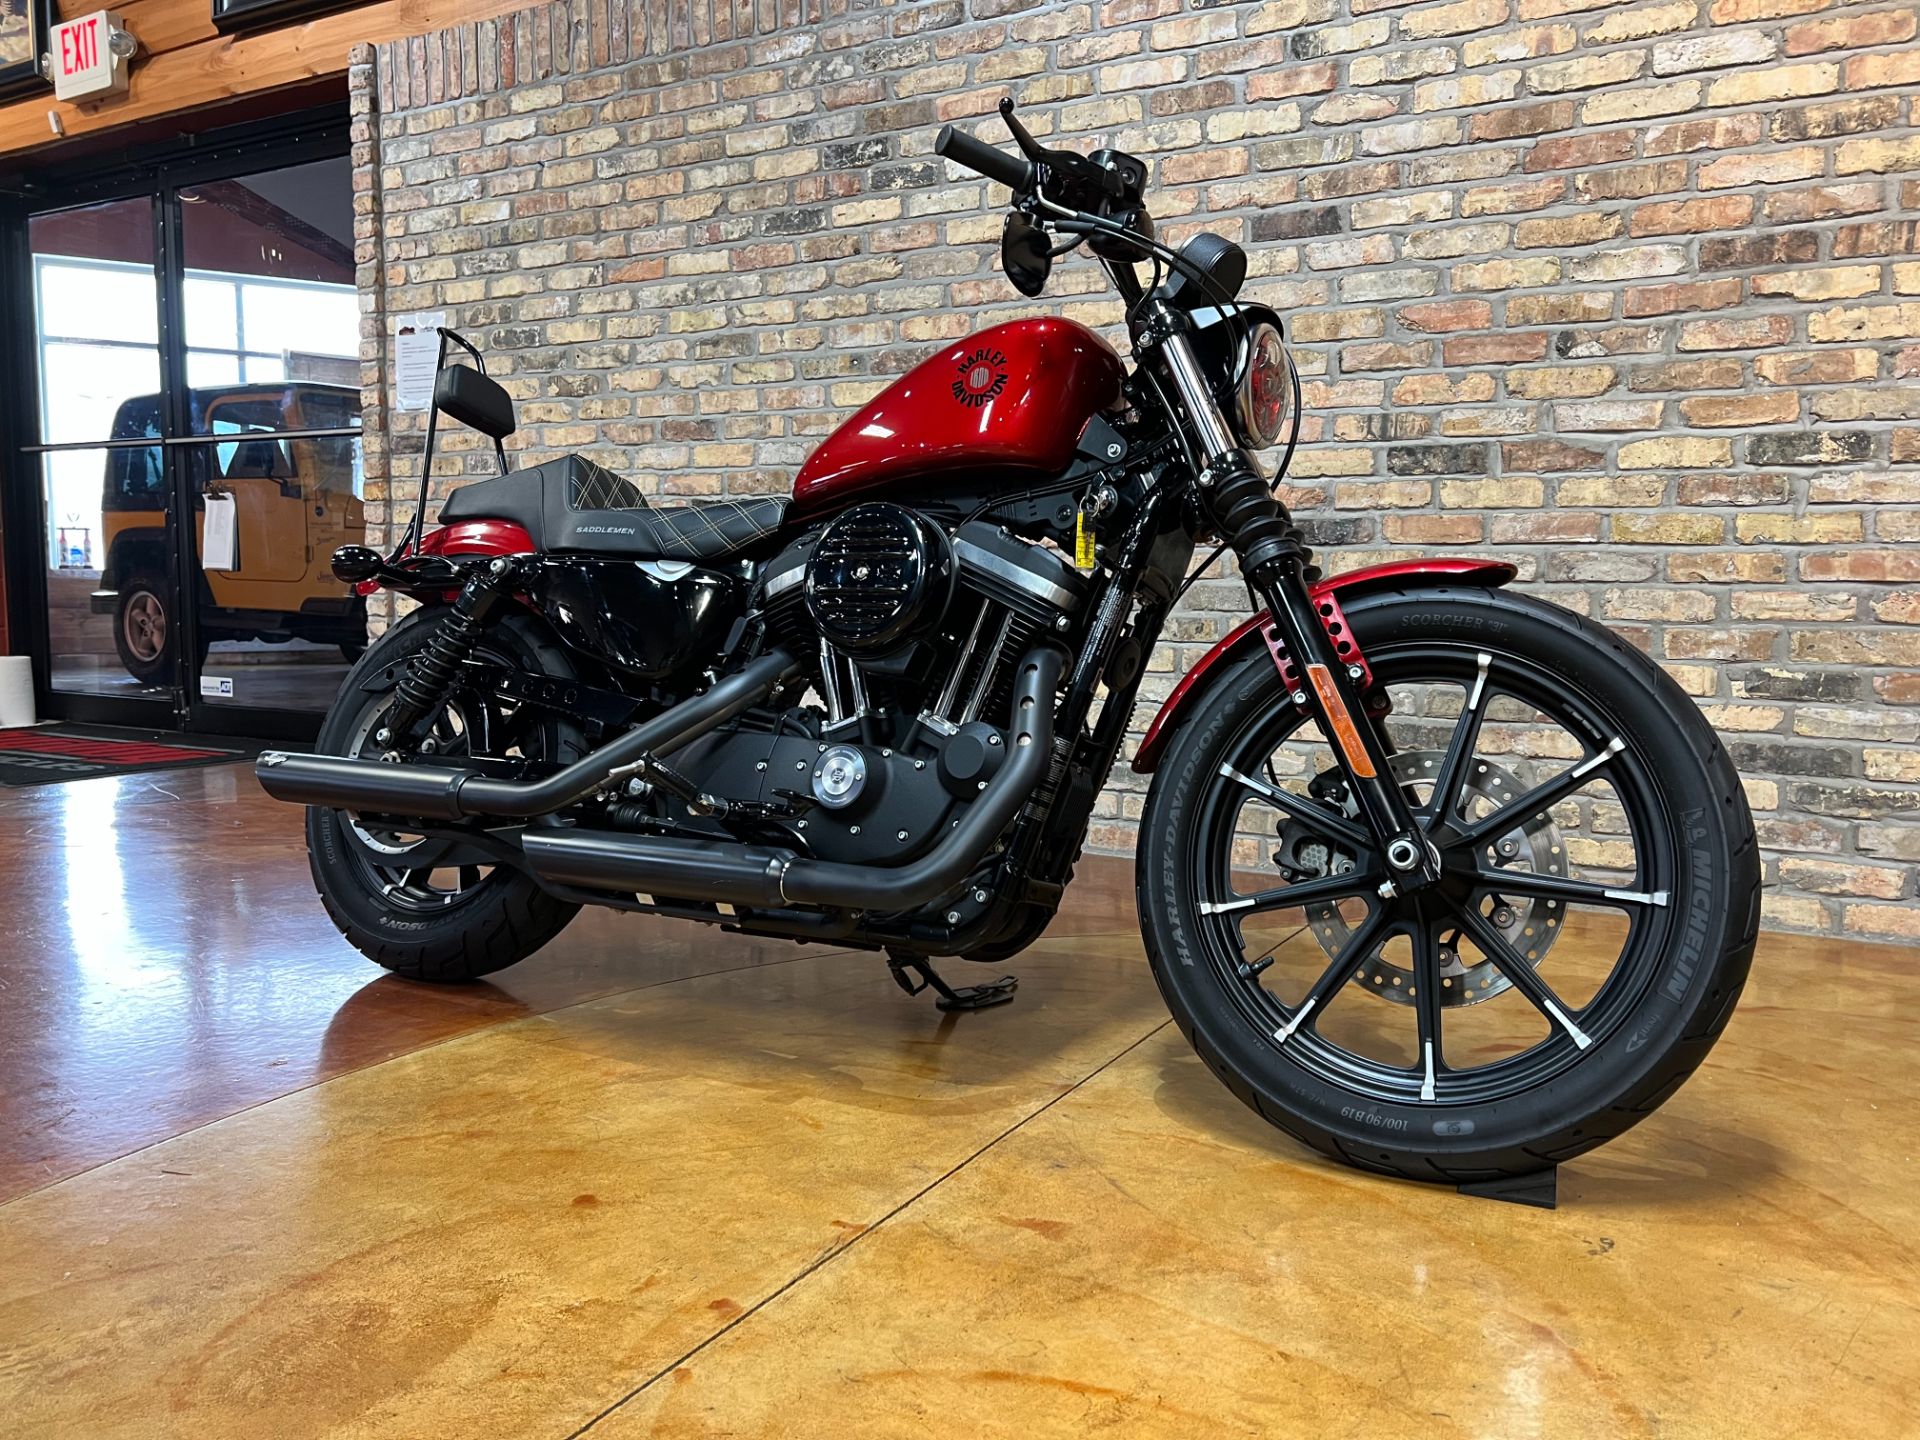 2019 Harley-Davidson Iron 883™ in Big Bend, Wisconsin - Photo 4